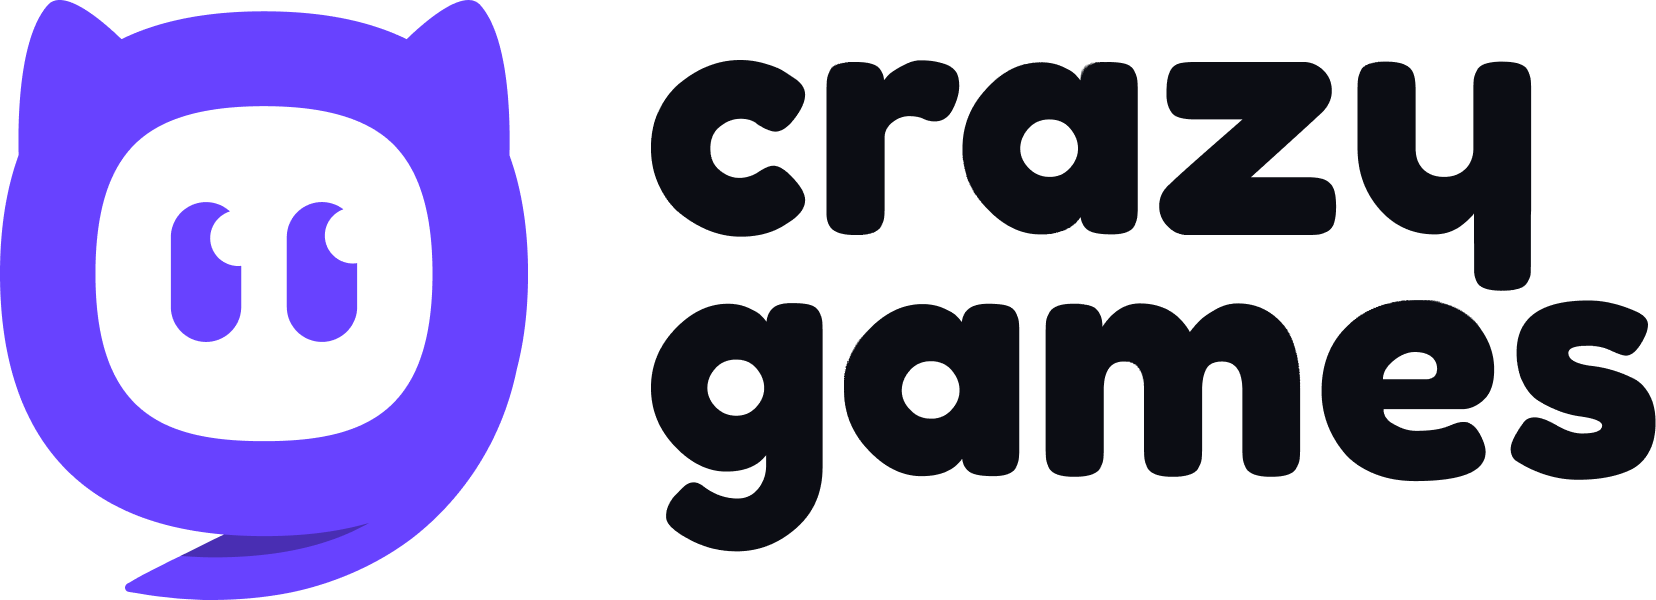 Crazy Games - Free Online Games on CrazyGames.com